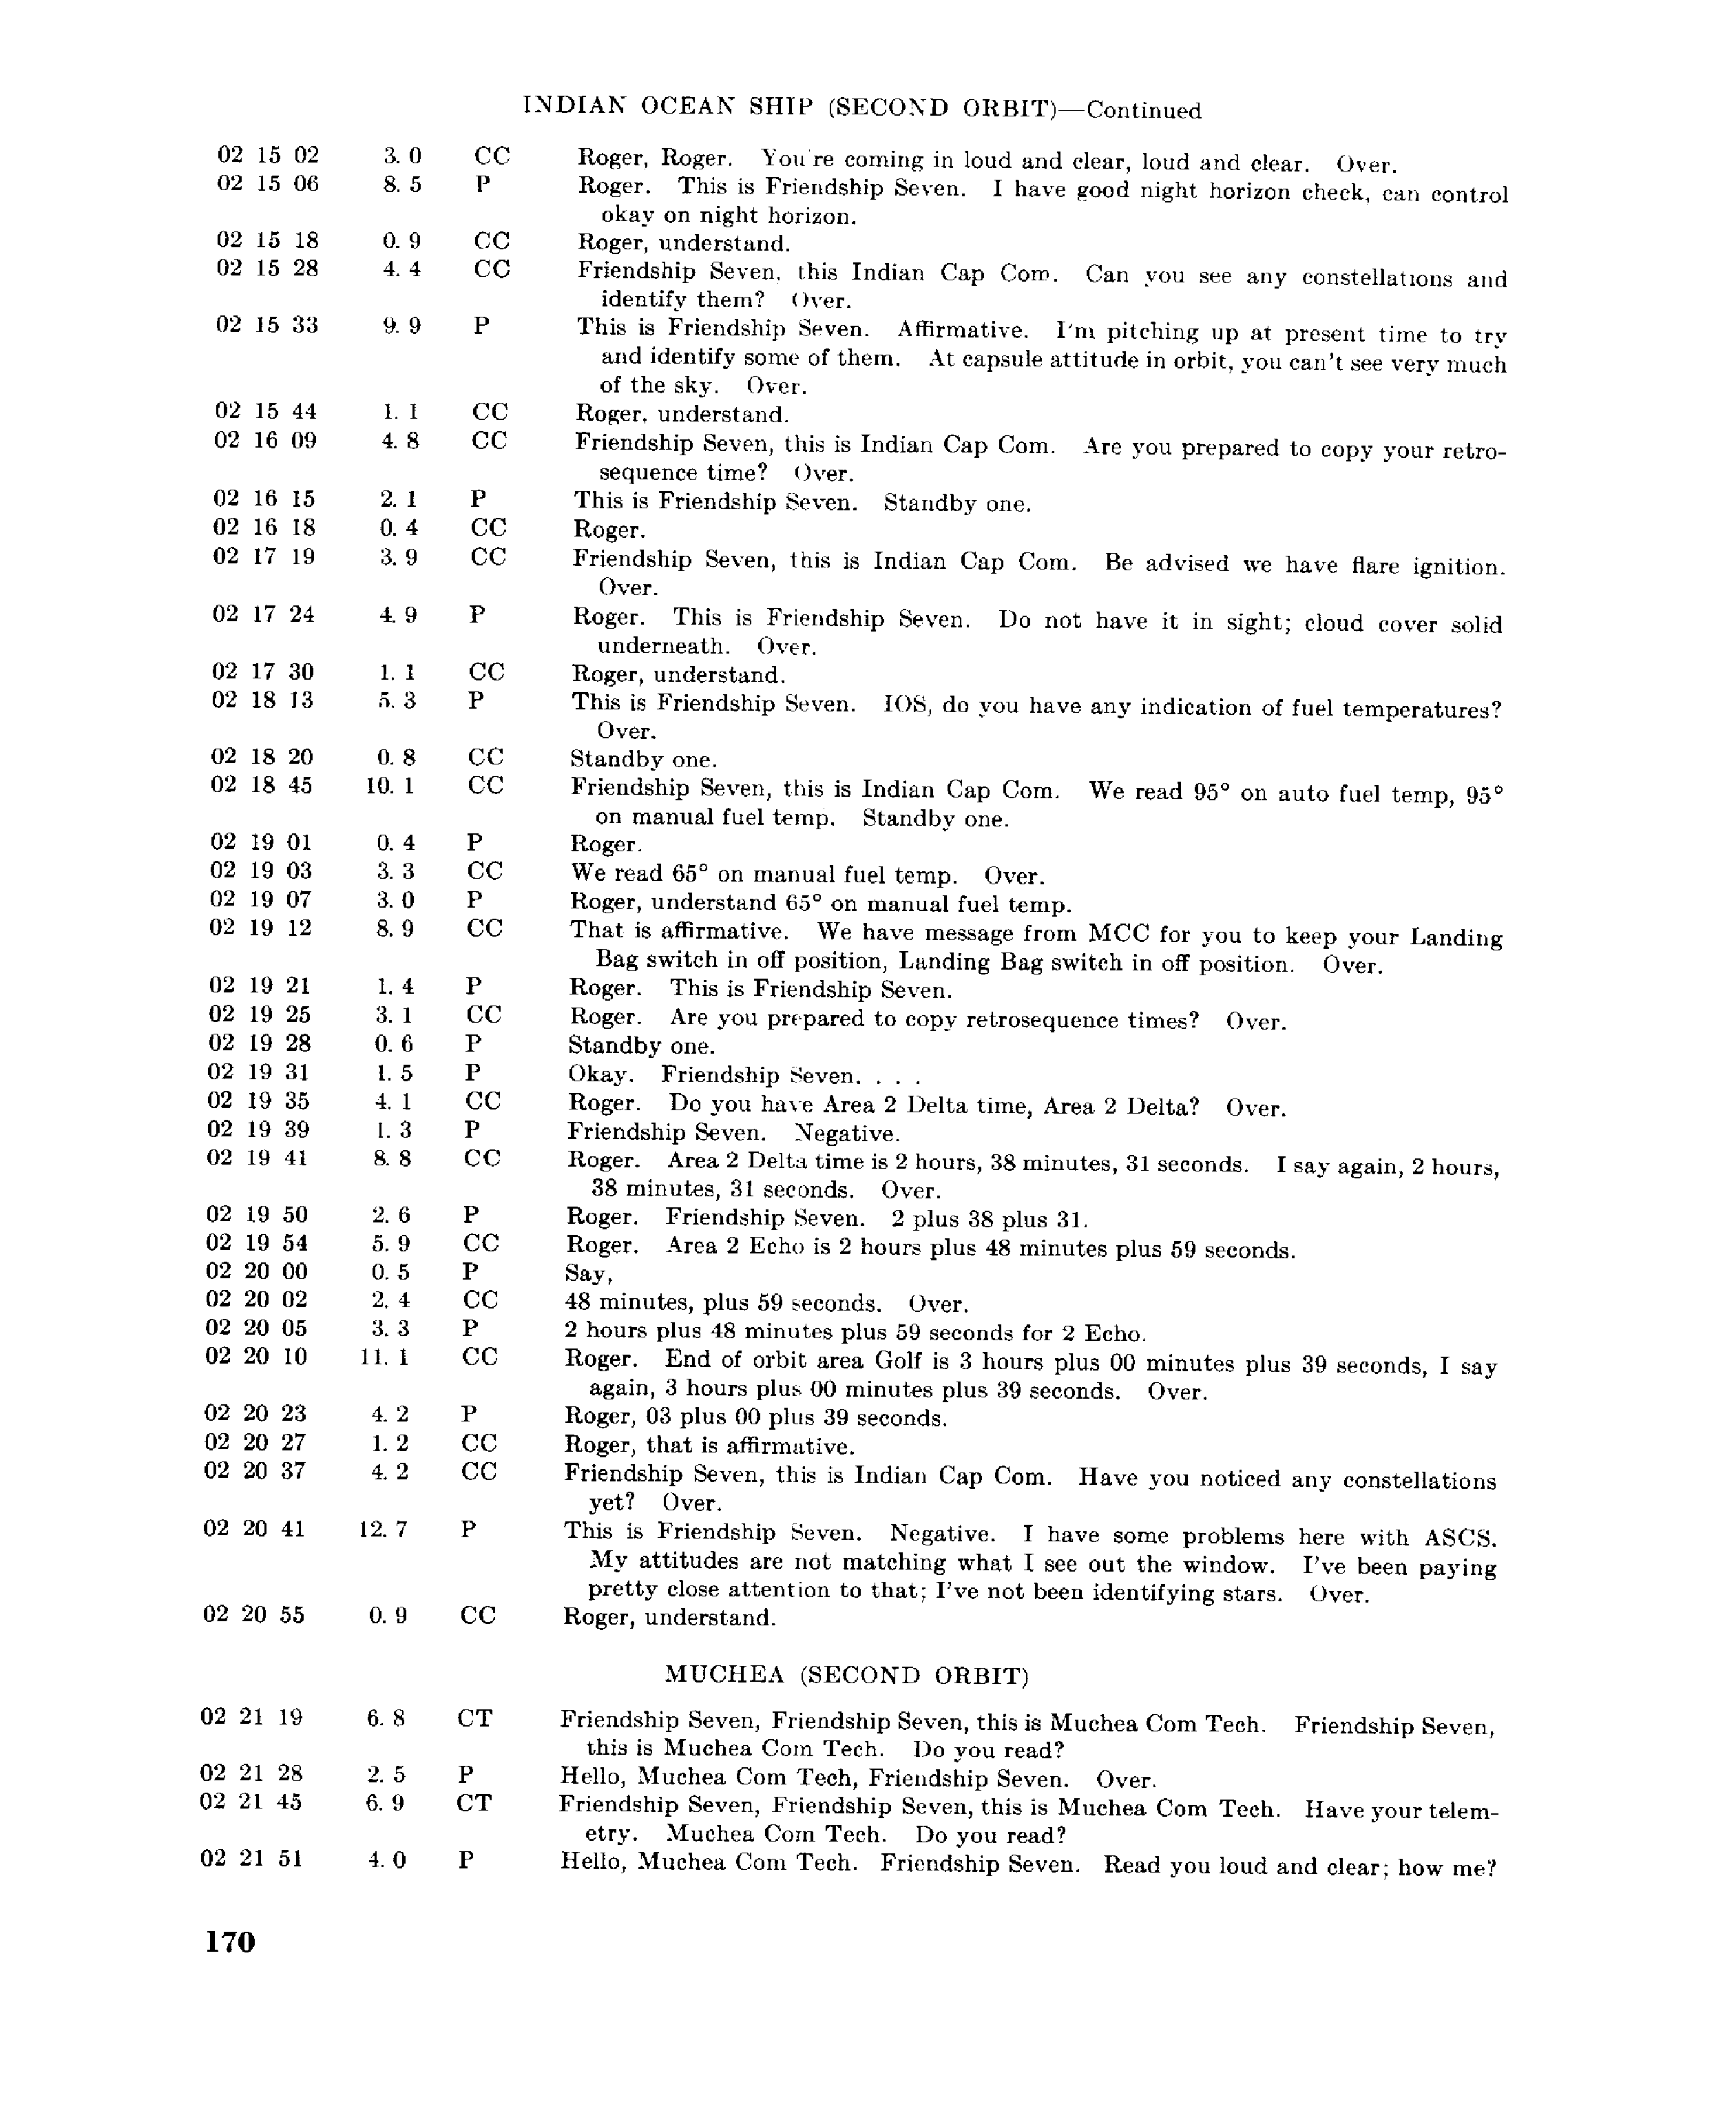 Page 169 of Mercury 6’s original transcript